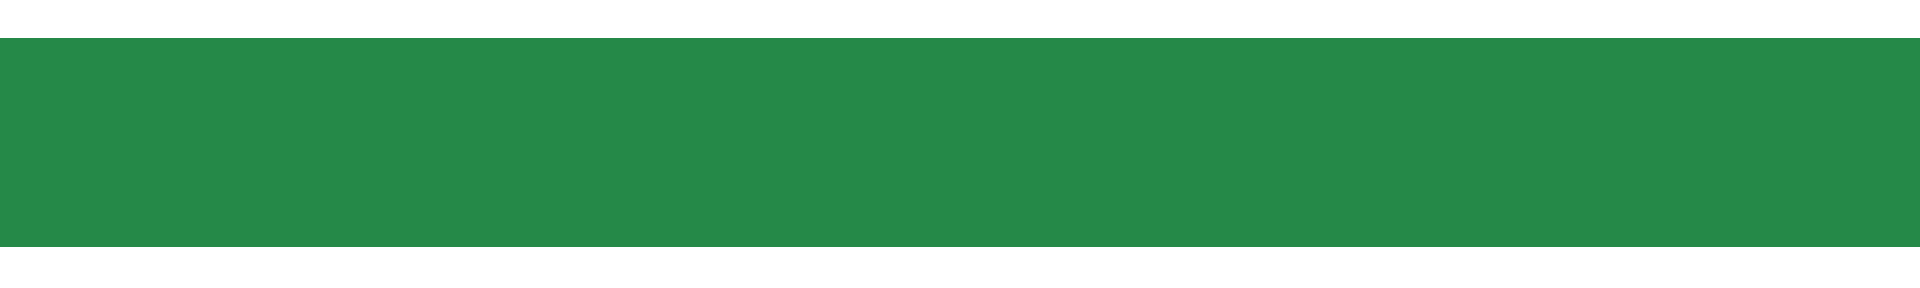 1920px横幅合わせシンプルな透過テロップ素材（緑・グリーン）